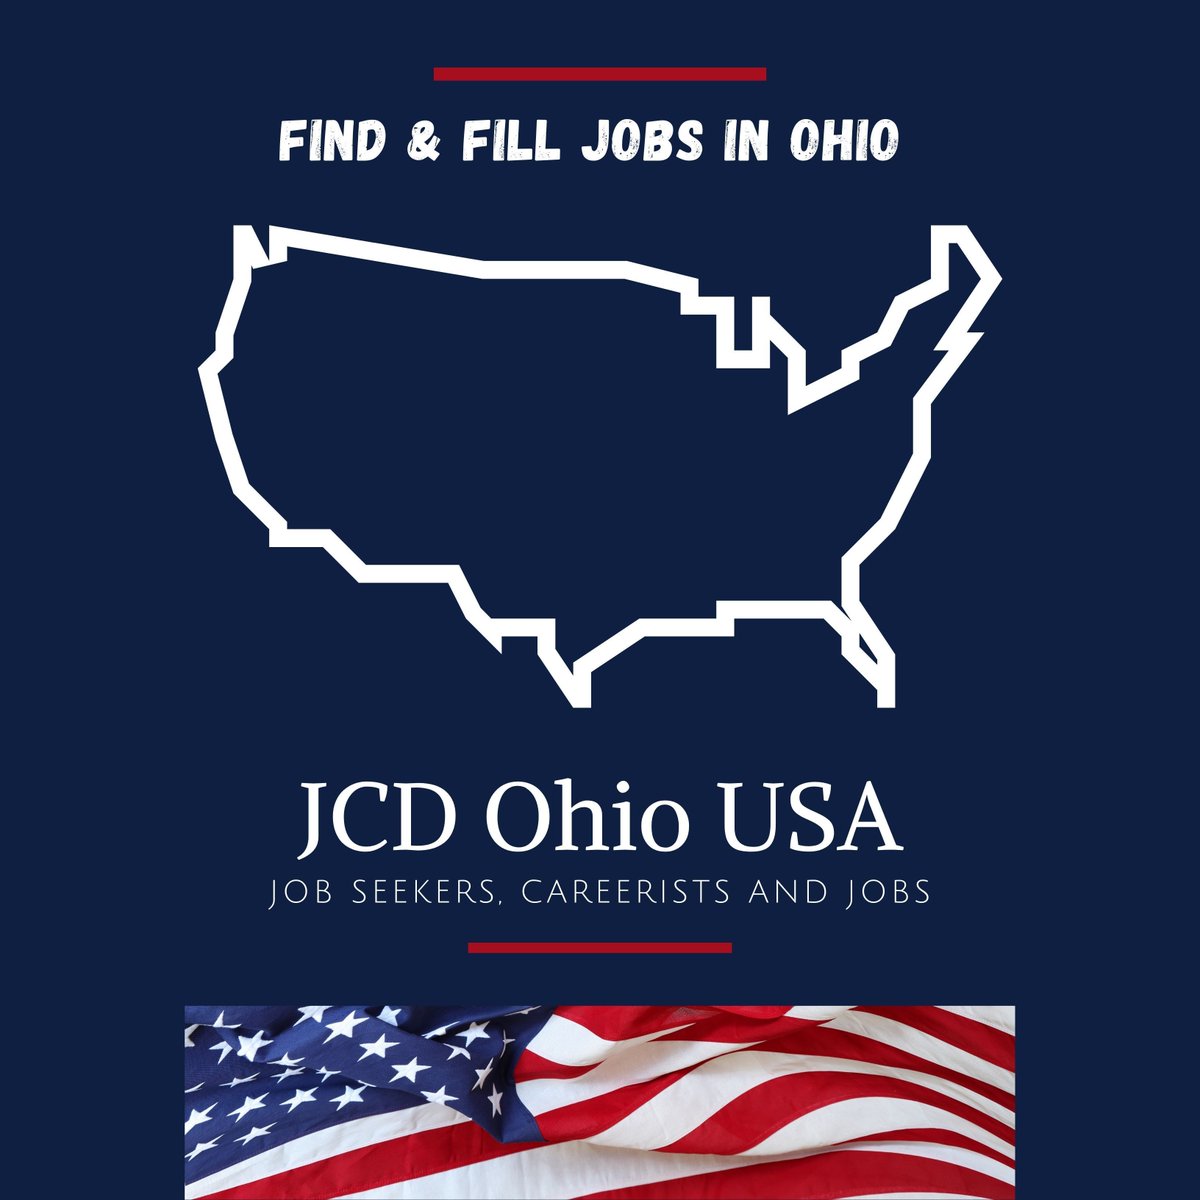 Looking for #jobs or #hiring #Talent in #Ohio? GO HERE buff.ly/3LFGRjO #ohiojobs #columbus #cincinnati #cleveland #cuyahogafalls #medina #sandusky #youngstown #amherst #beachwood #bellefontaine #columbusjobs #cincinnatijobs #clevelandjobs #usa #usajobs #linkedingroups